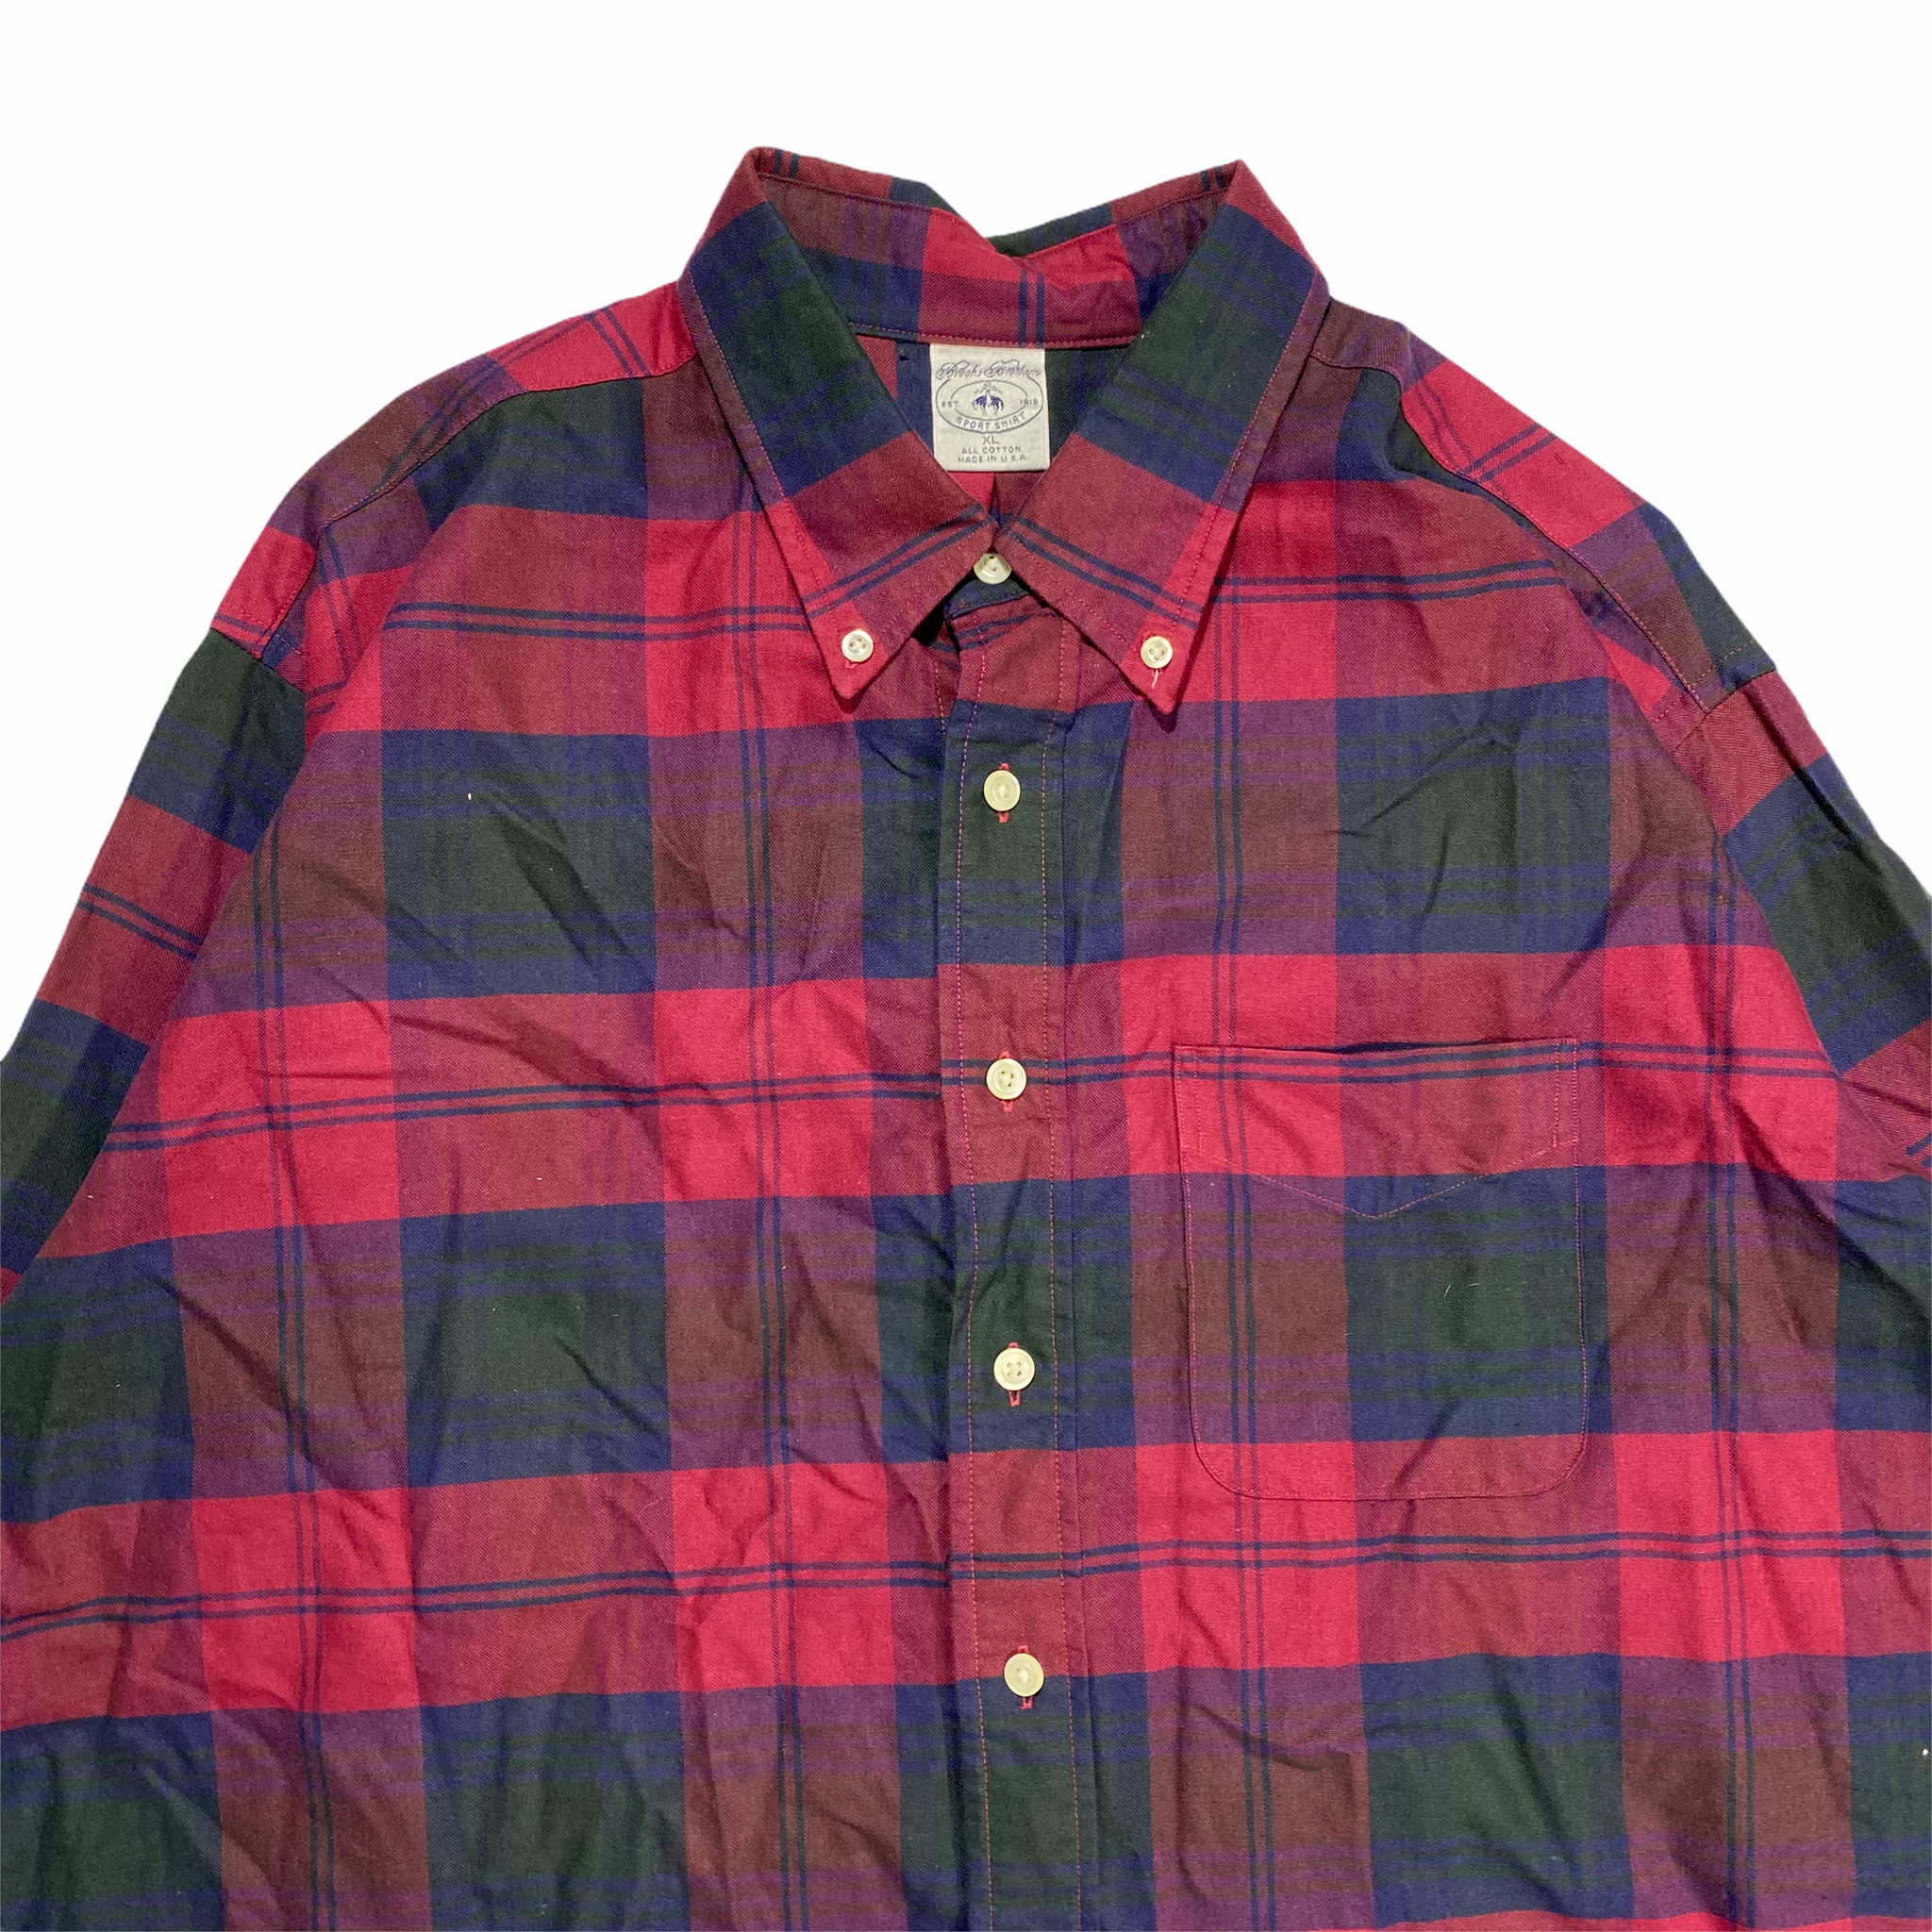 90s Brooks brothers tartan shirt. Made in usa🇺🇸. XL